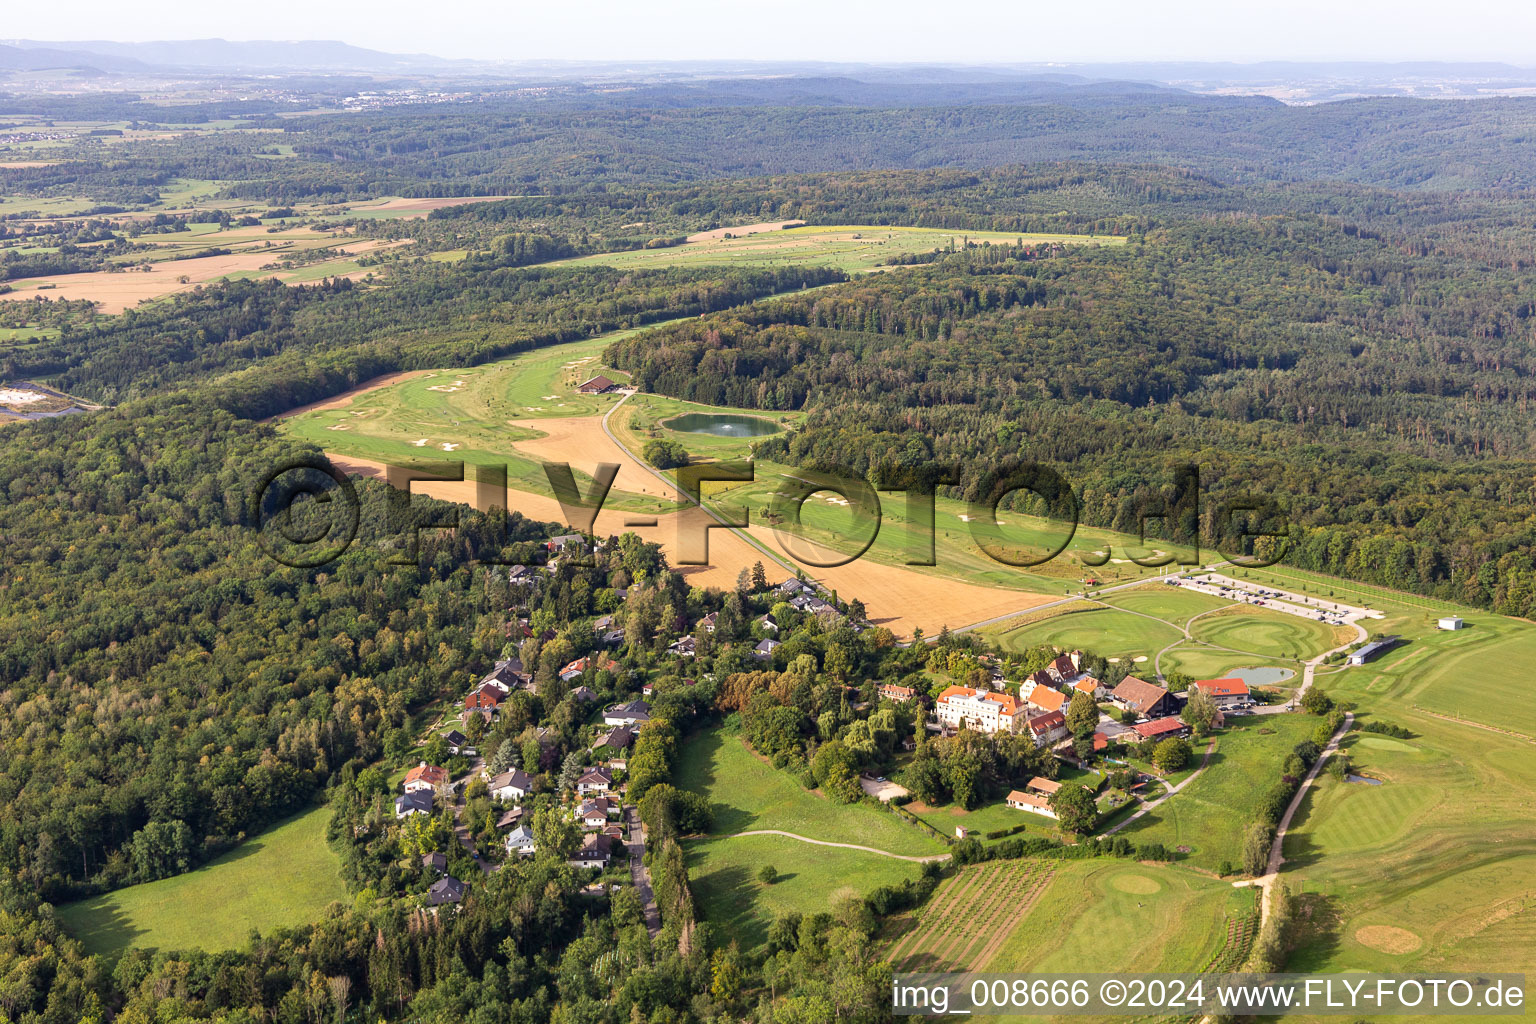 Vue aérienne de Superficie du terrain de golf Golfclub Schloss Kressbach à Kressbach dans le département Bade-Wurtemberg, Allemagne